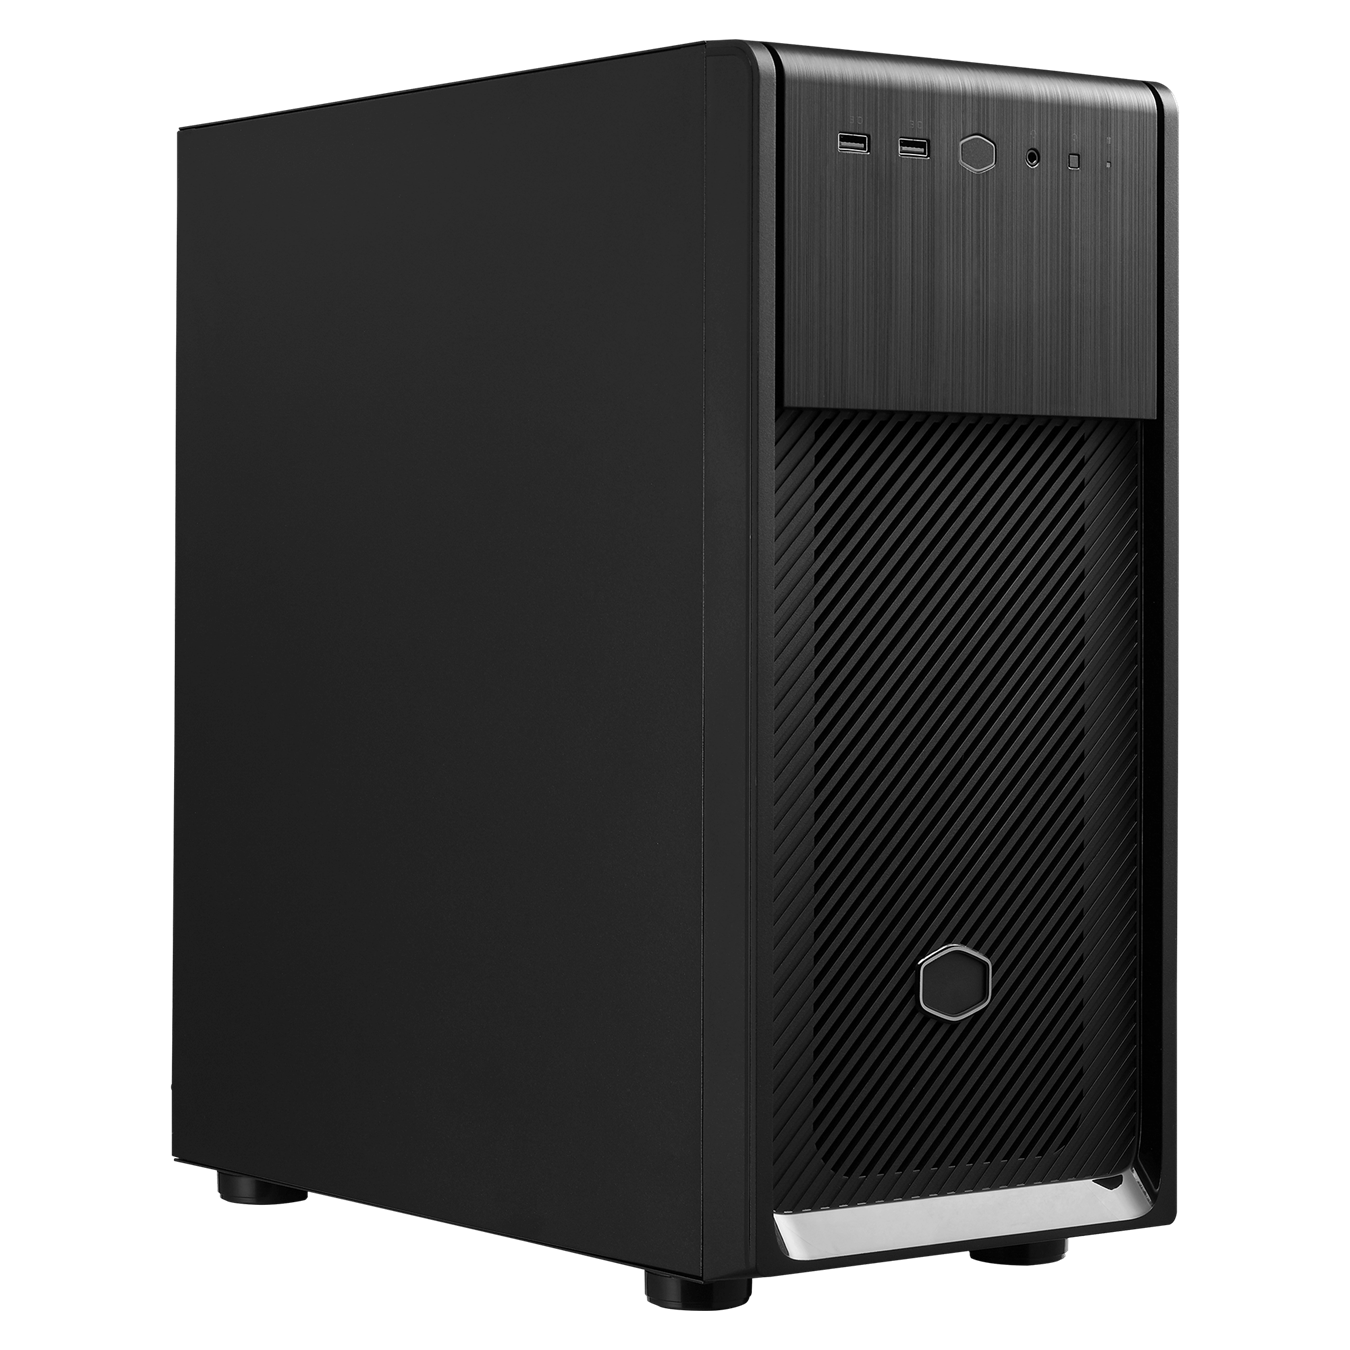  Mid-Tower Case: Elite 500 With 500W PSU - Black<BR>1x 120mm Fan, 2x USB 3.2 Gen 1, 1x 5.25" Bay, Solid Side Panel, Supports: ATX/mATX/mini-ITX  